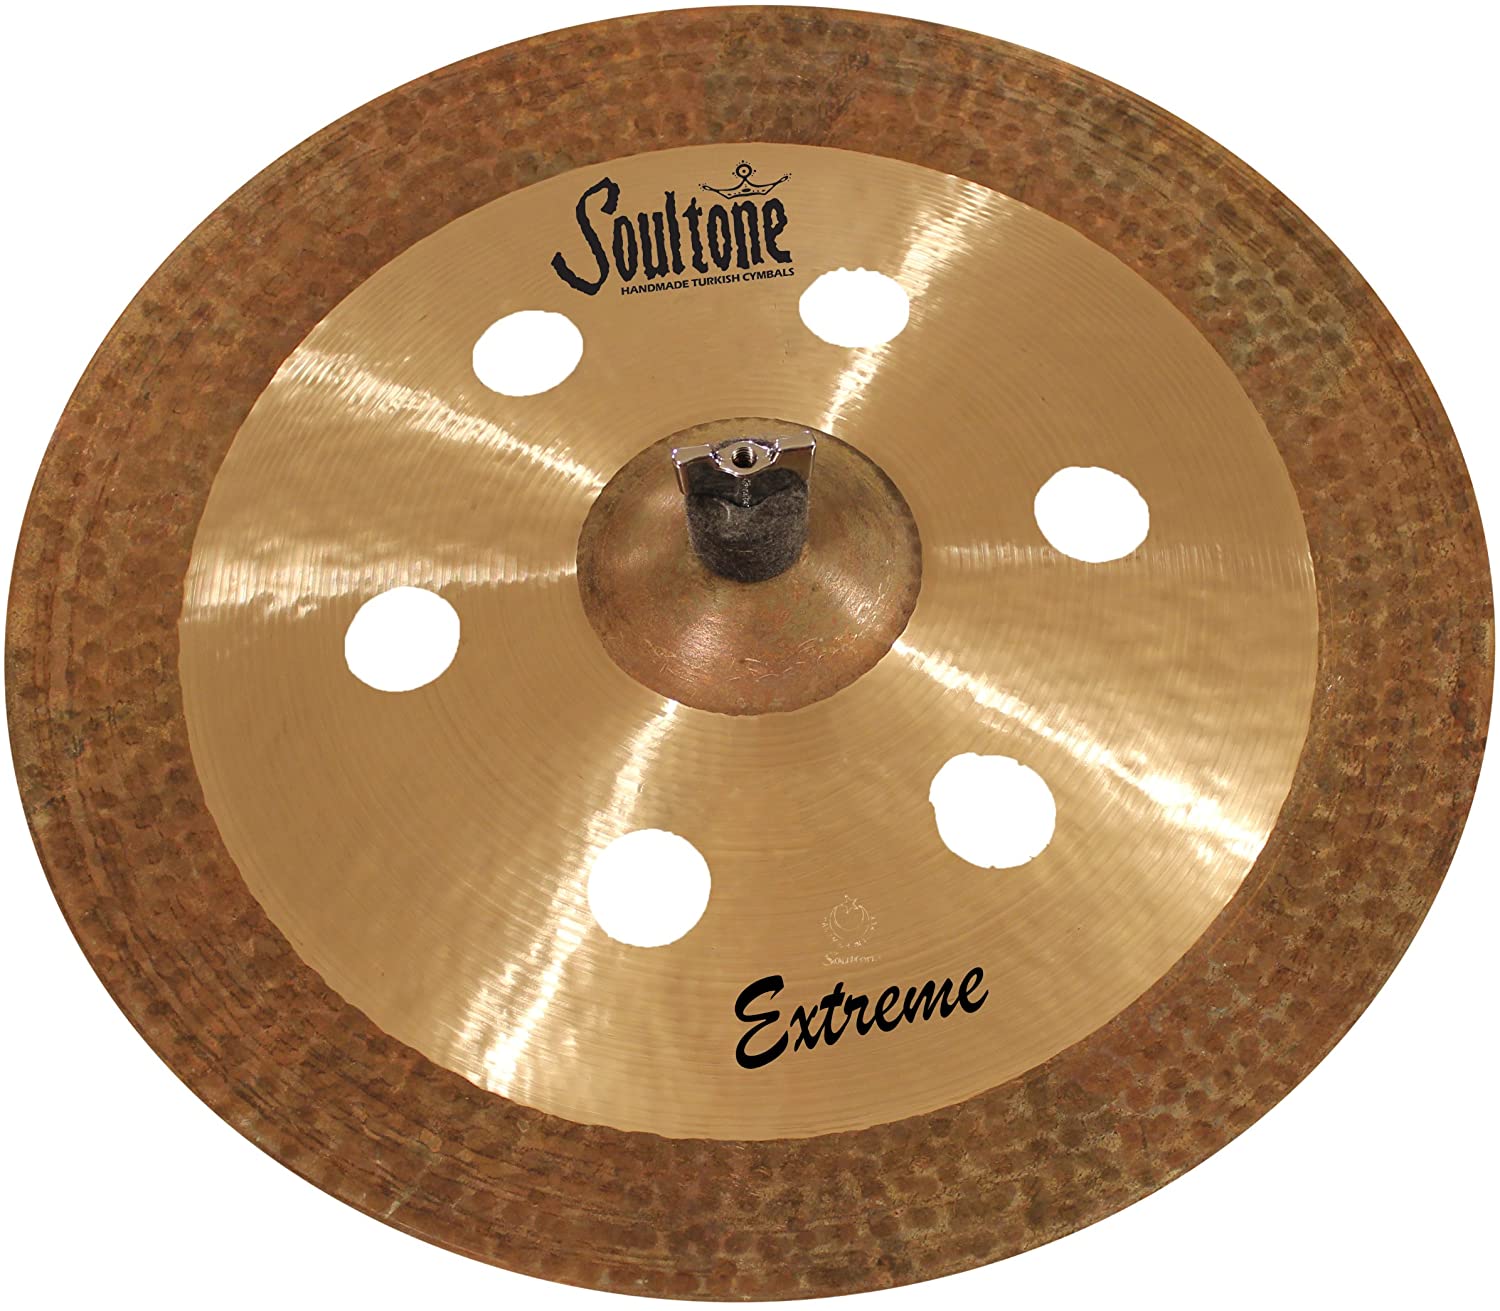 Soultone Cymbals